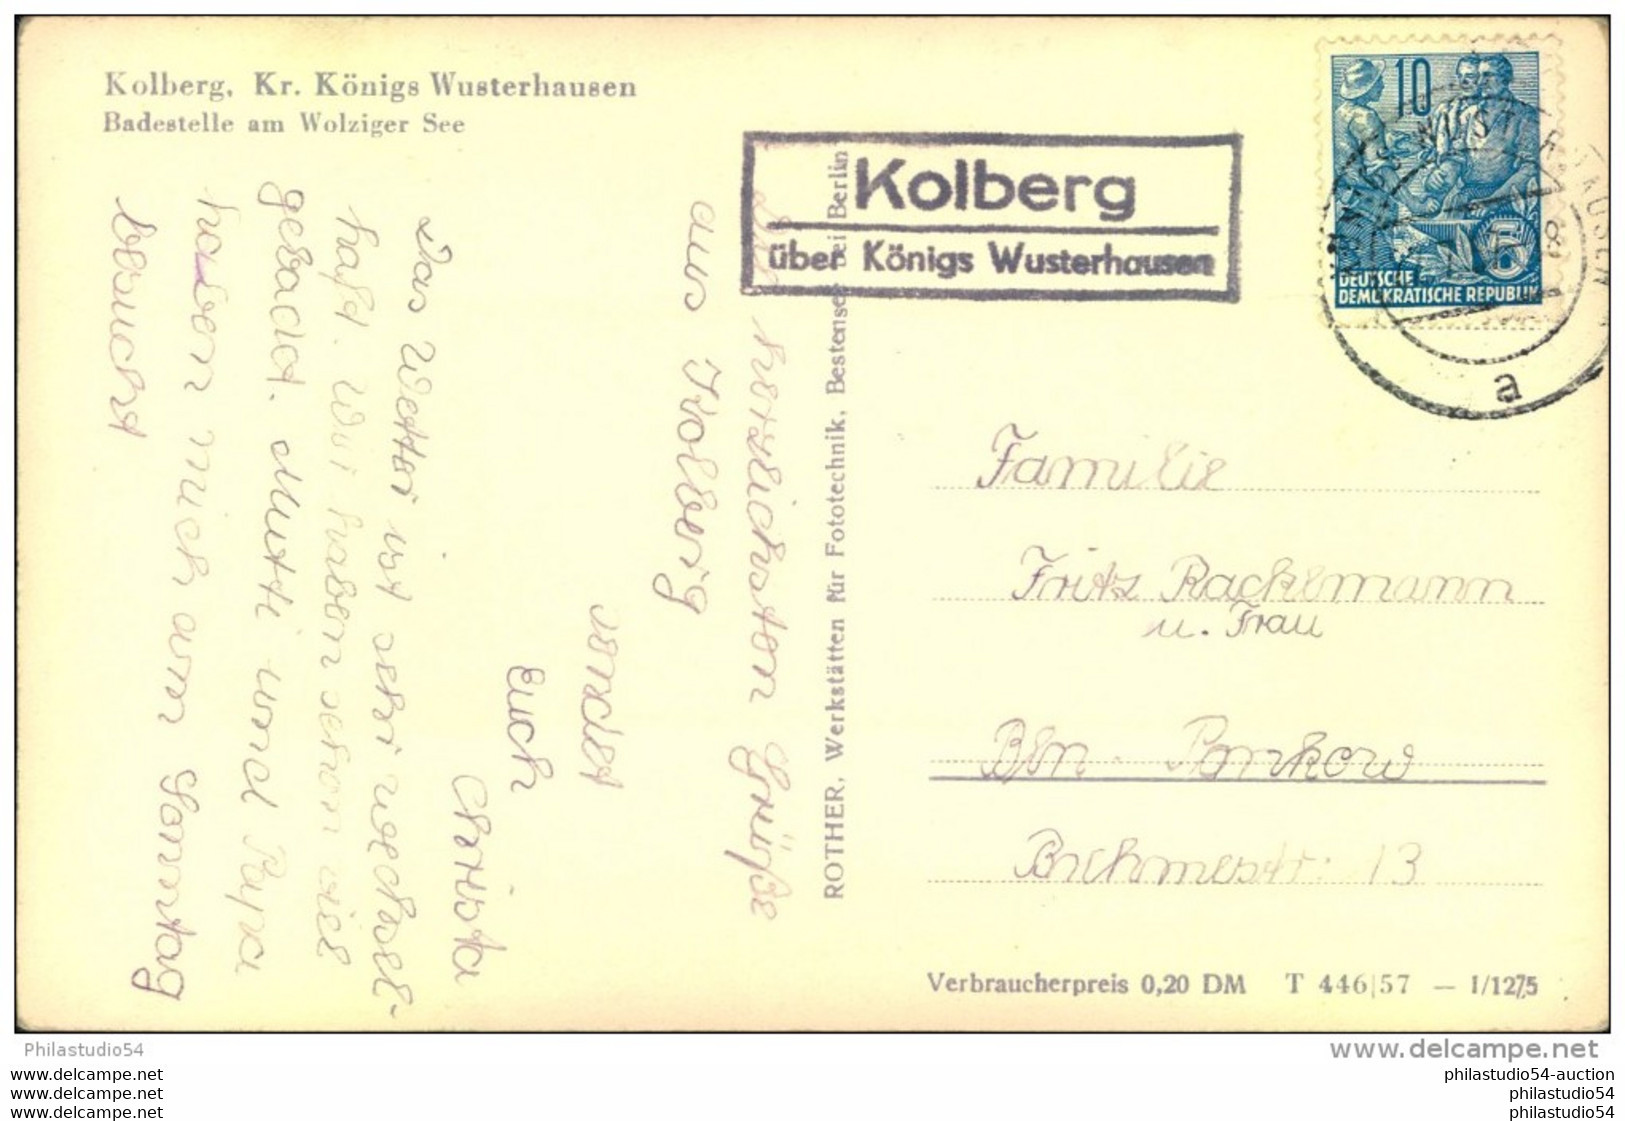 Brandenburg : 1957, Postkarte Posthilfsstelle "Kolberg über Königs Wusterhausen" - Máquinas Franqueo (EMA)